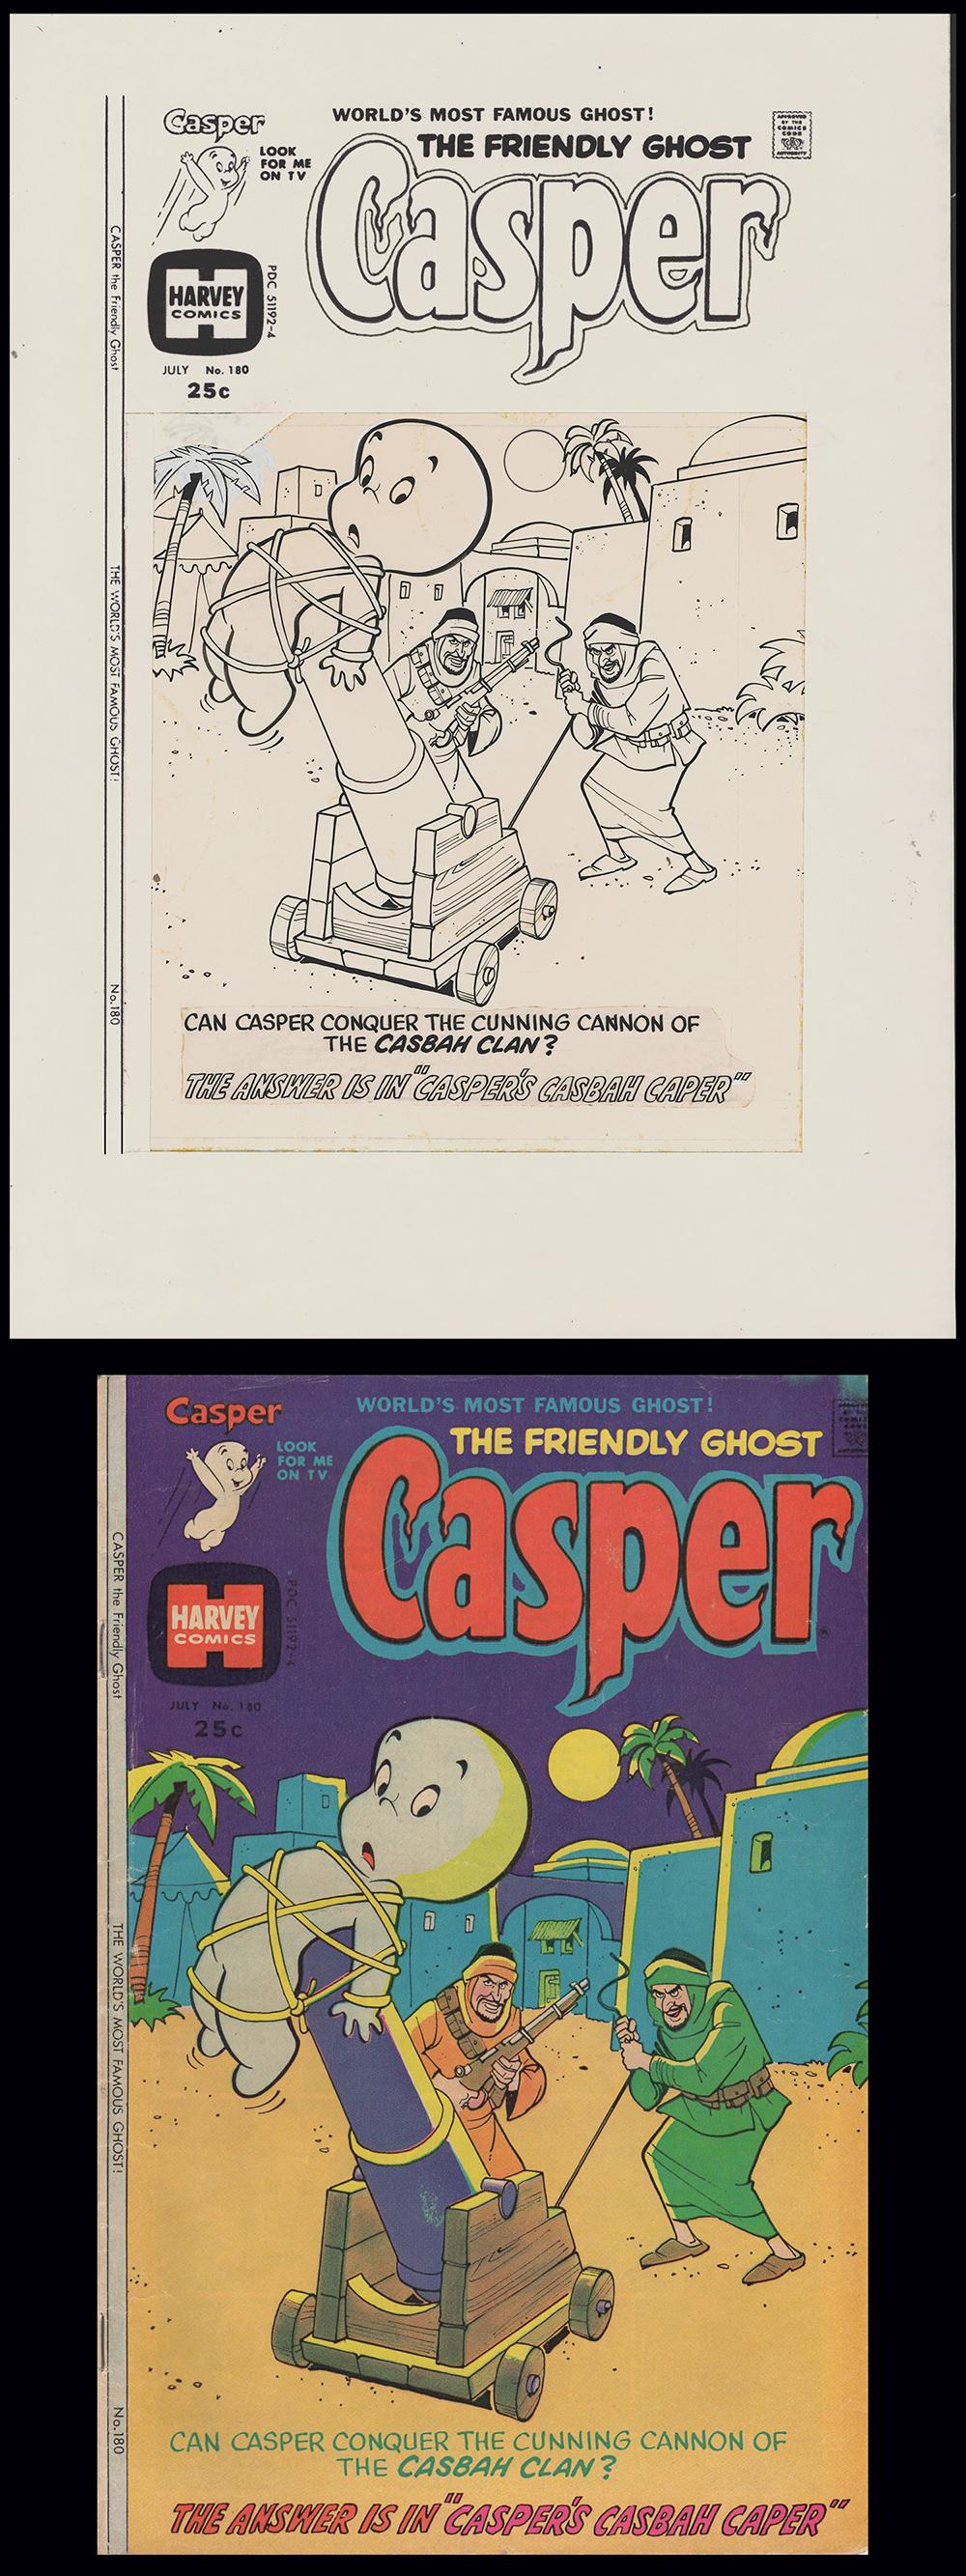 Image: Casper the Friendly Ghost #180 Cover art by Ernie Colon